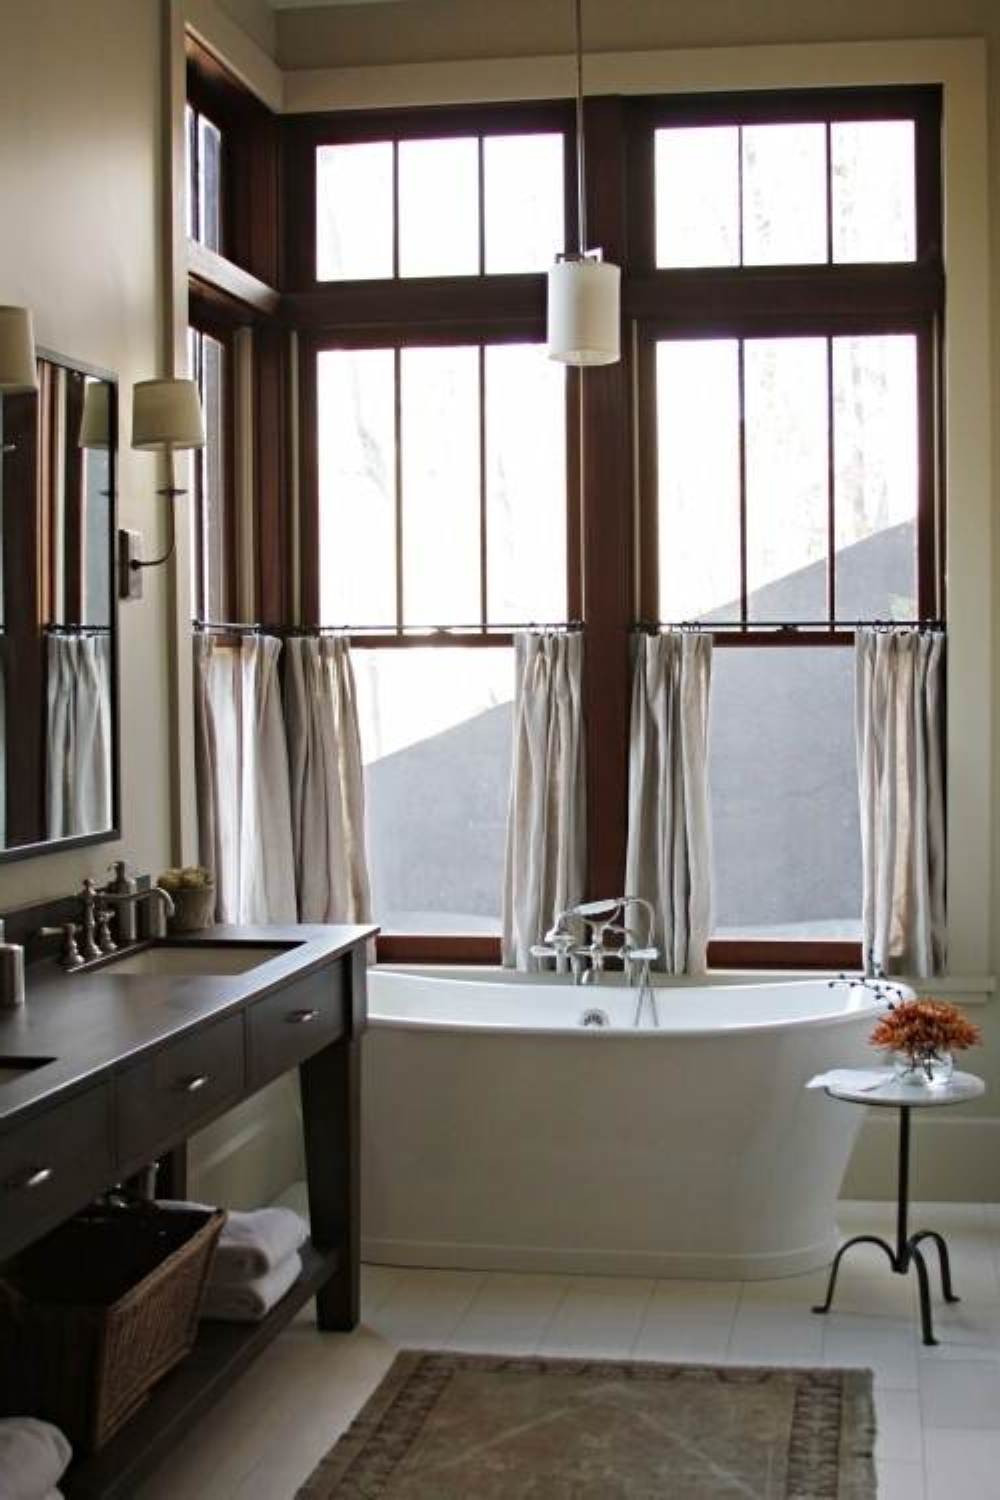 Traditional Bathroom Tile Ideas
 26 amazing pictures of traditional bathroom tile design ideas